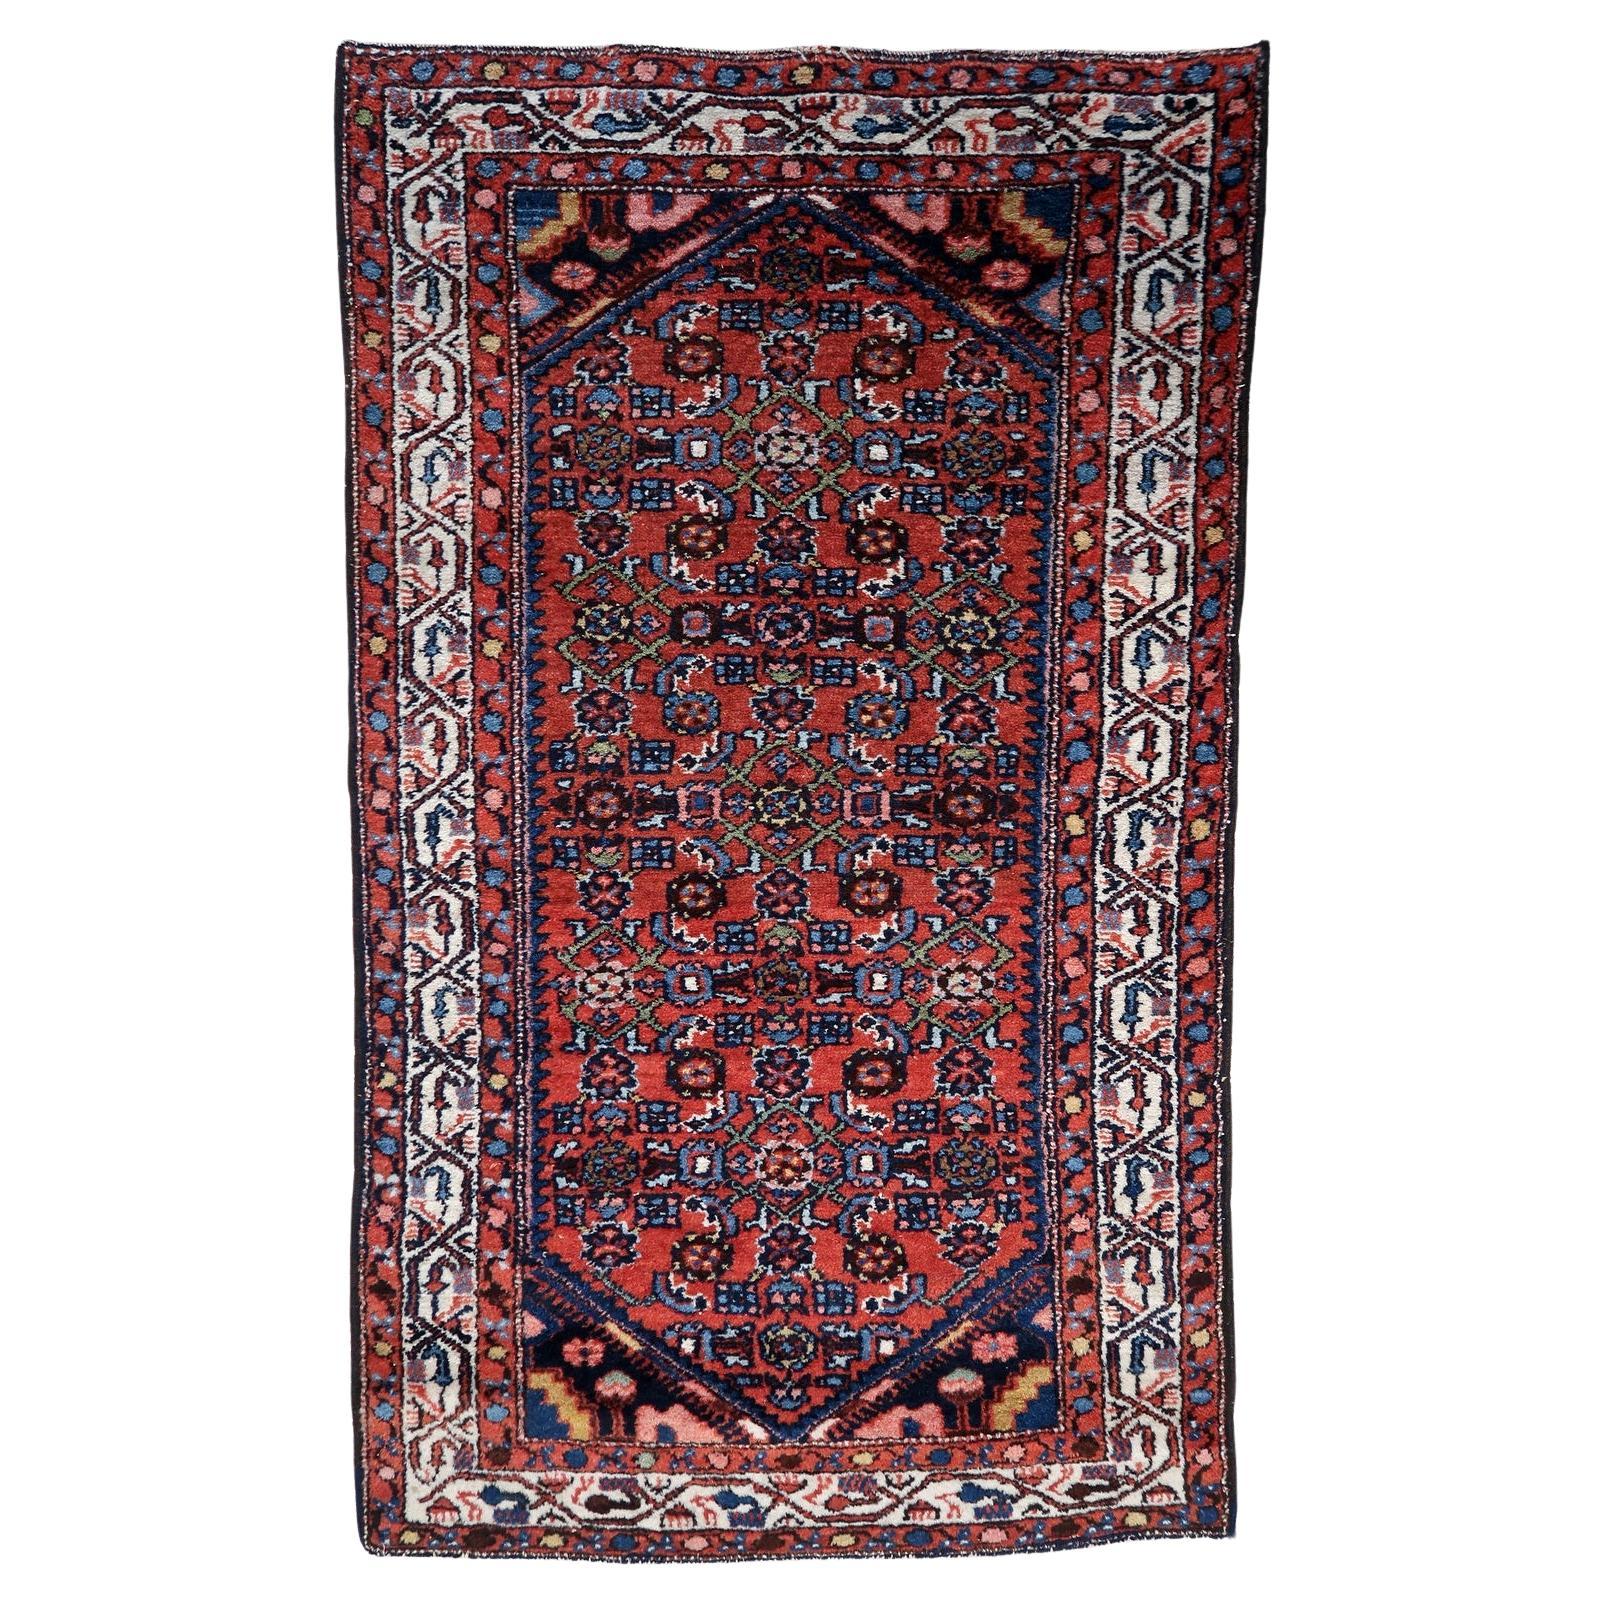 Handmade Vintage Persian Style Hamadan Rug 2.4' x 4.1', 1970s - 1C1122